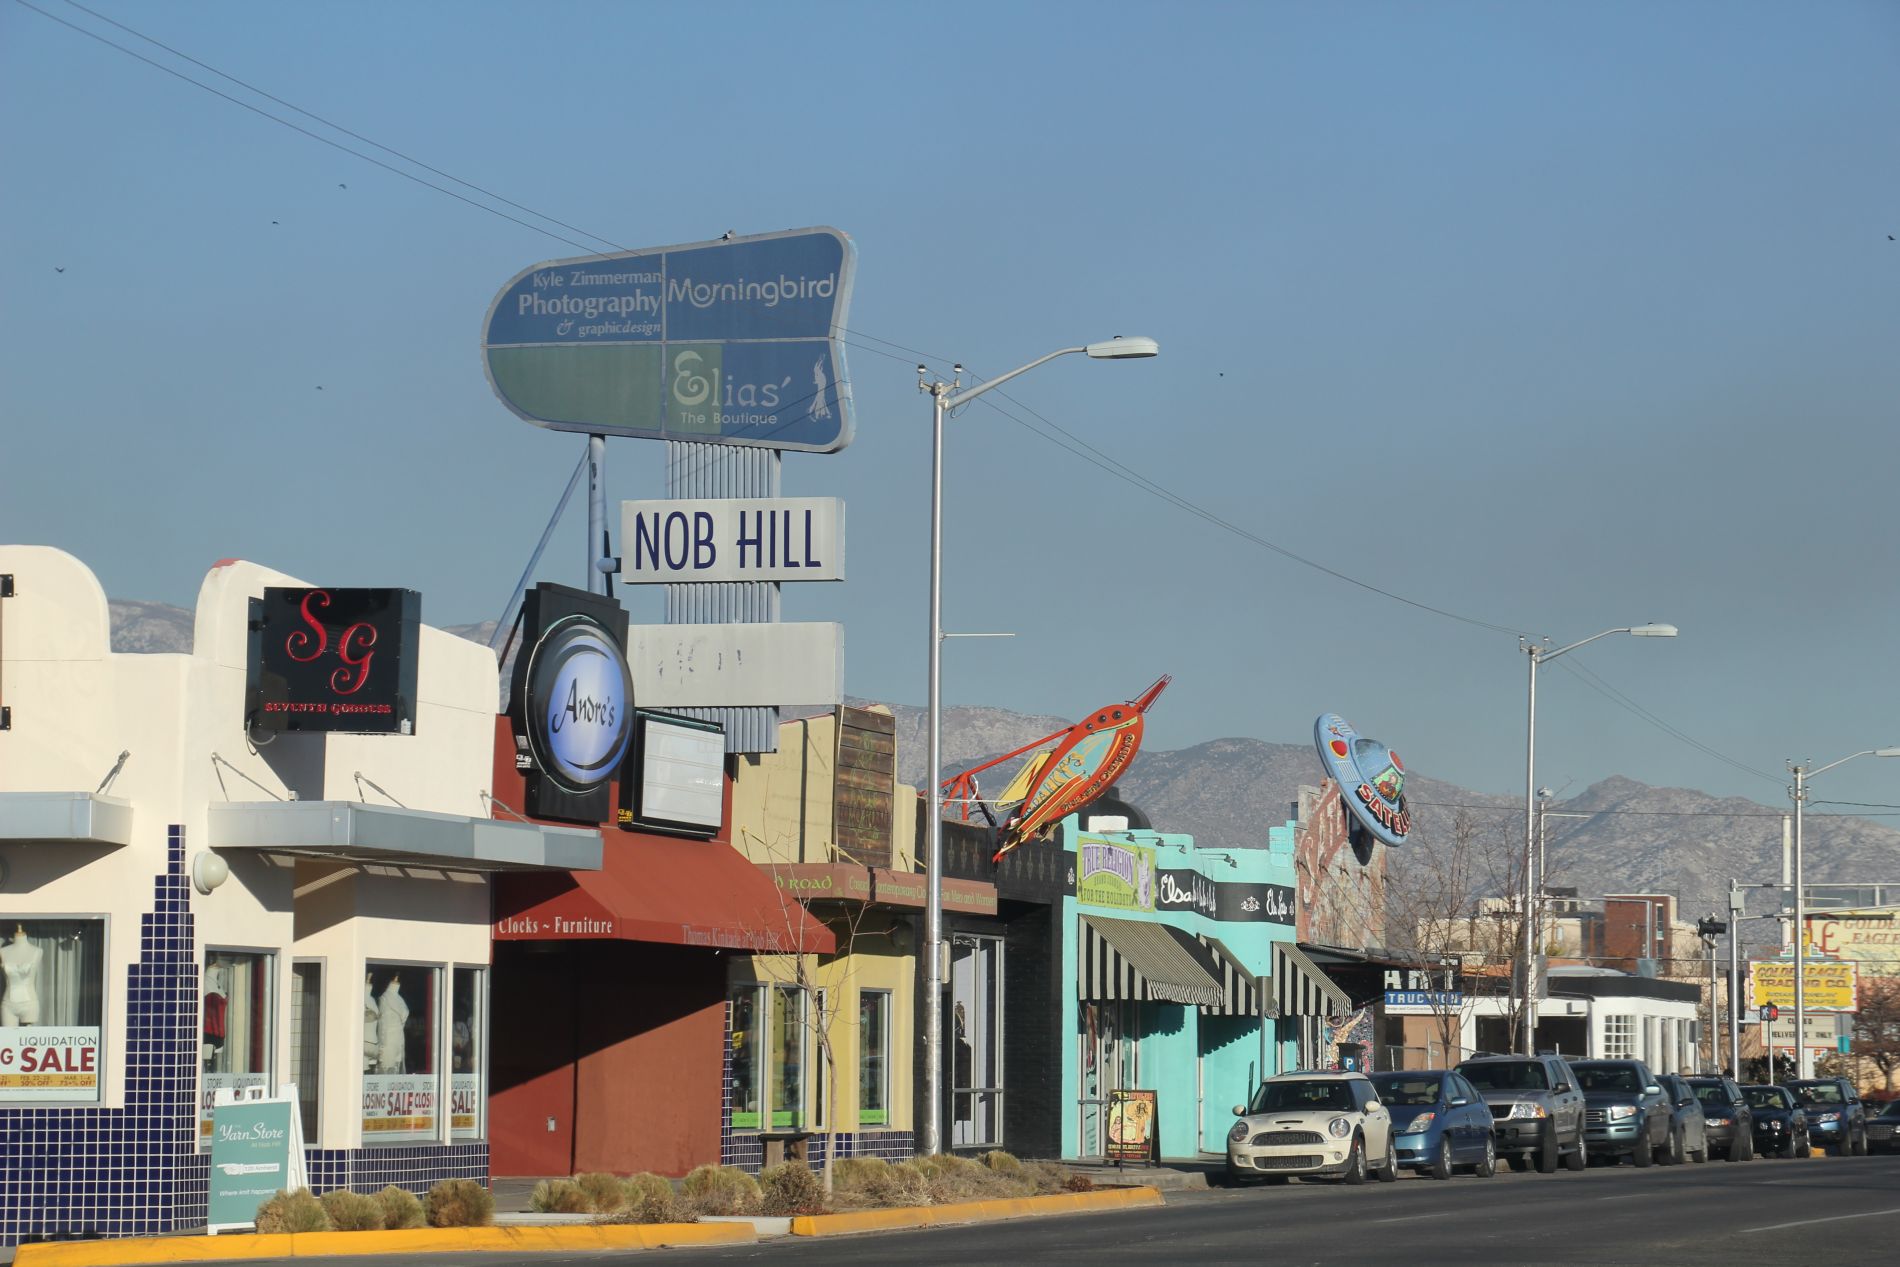 Nob Hill in Albuquerque, New Mexico